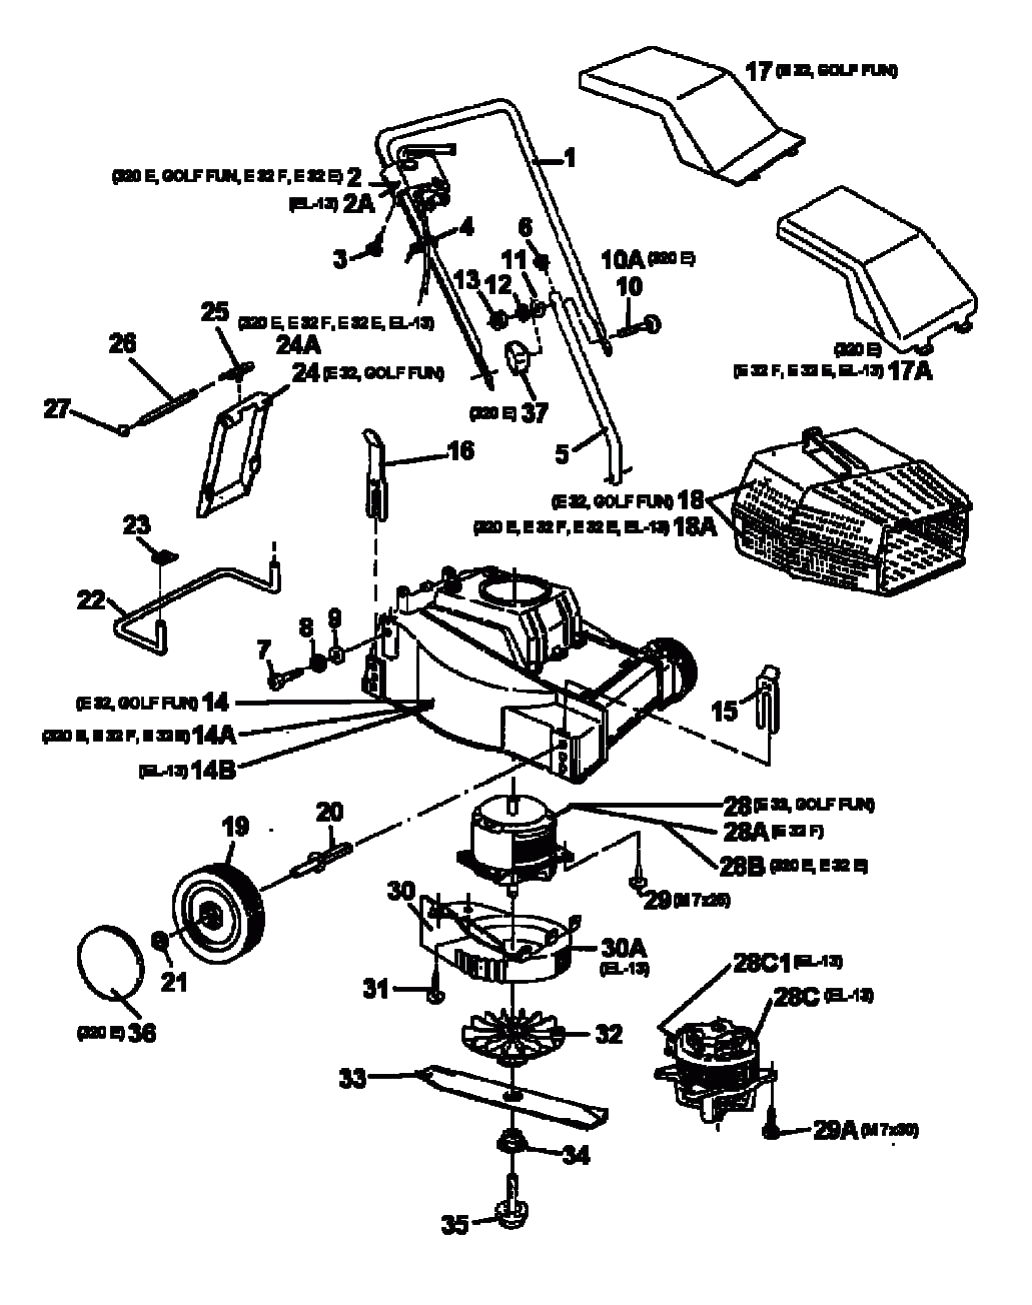 MTD Артикул 18A-A0C-678 (год выпуска 1998)